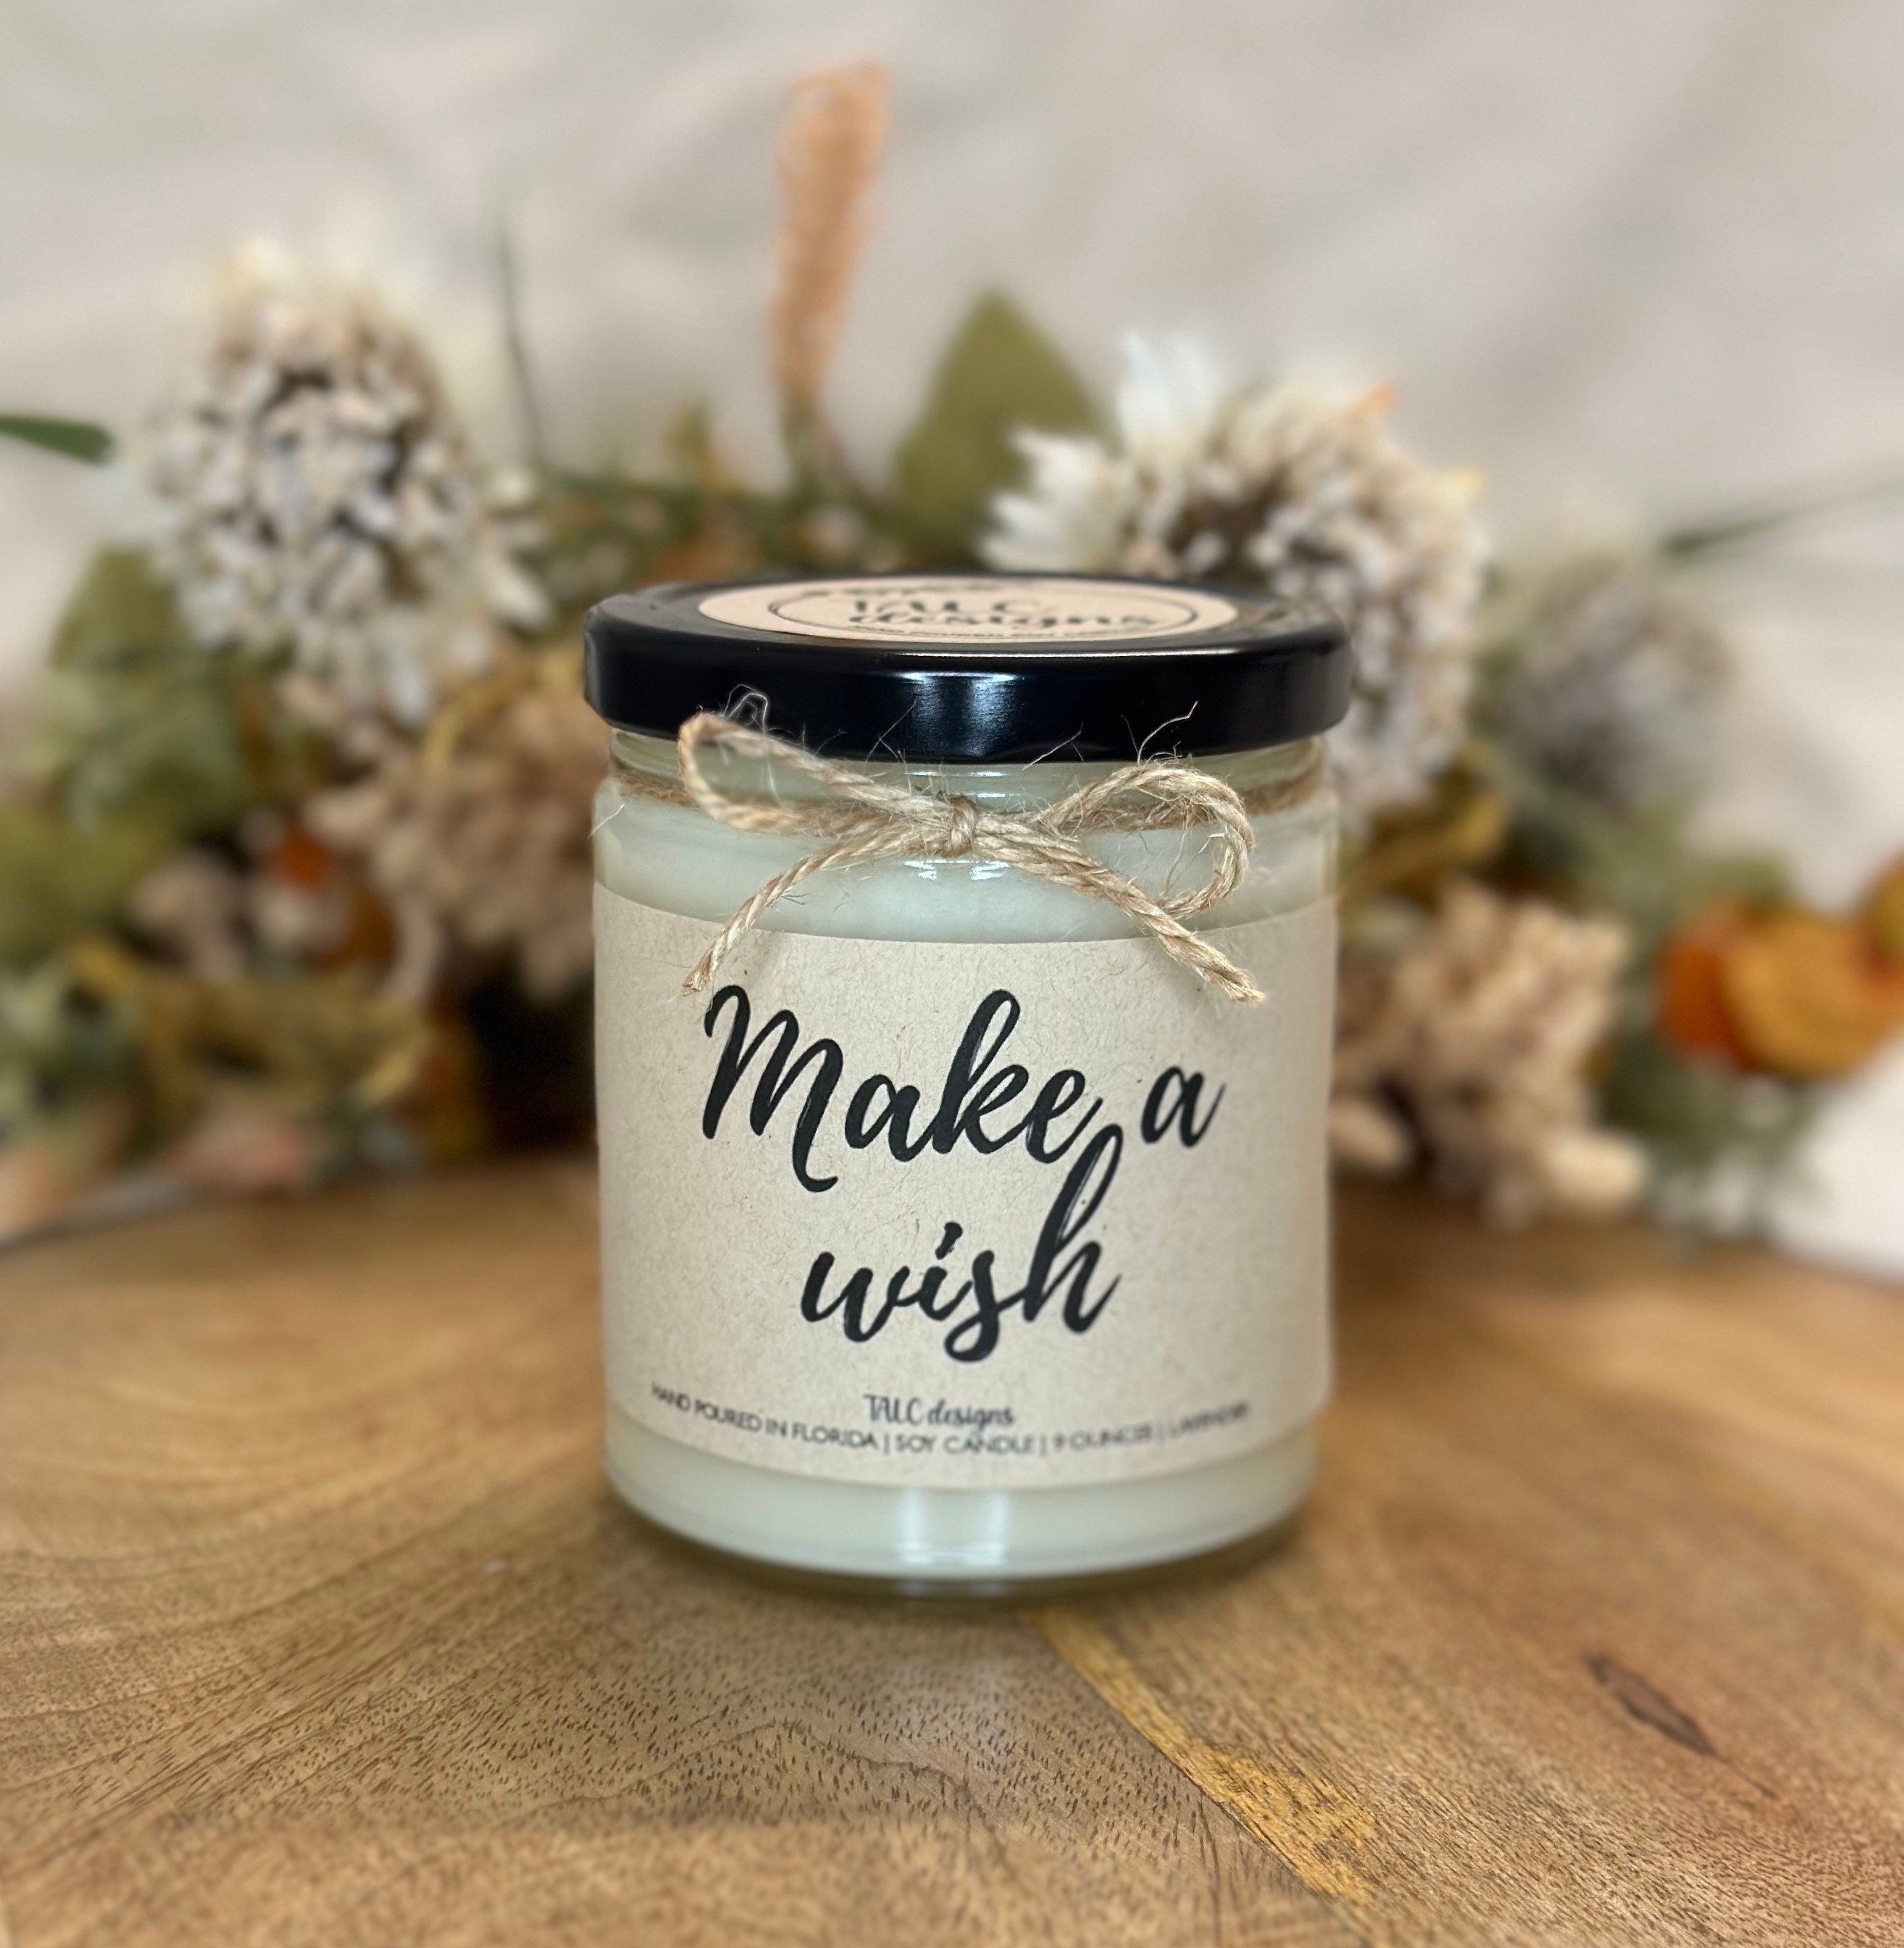 Fresh Herbs Mason Jar Candle - 16 oz - Herbal Star Candles